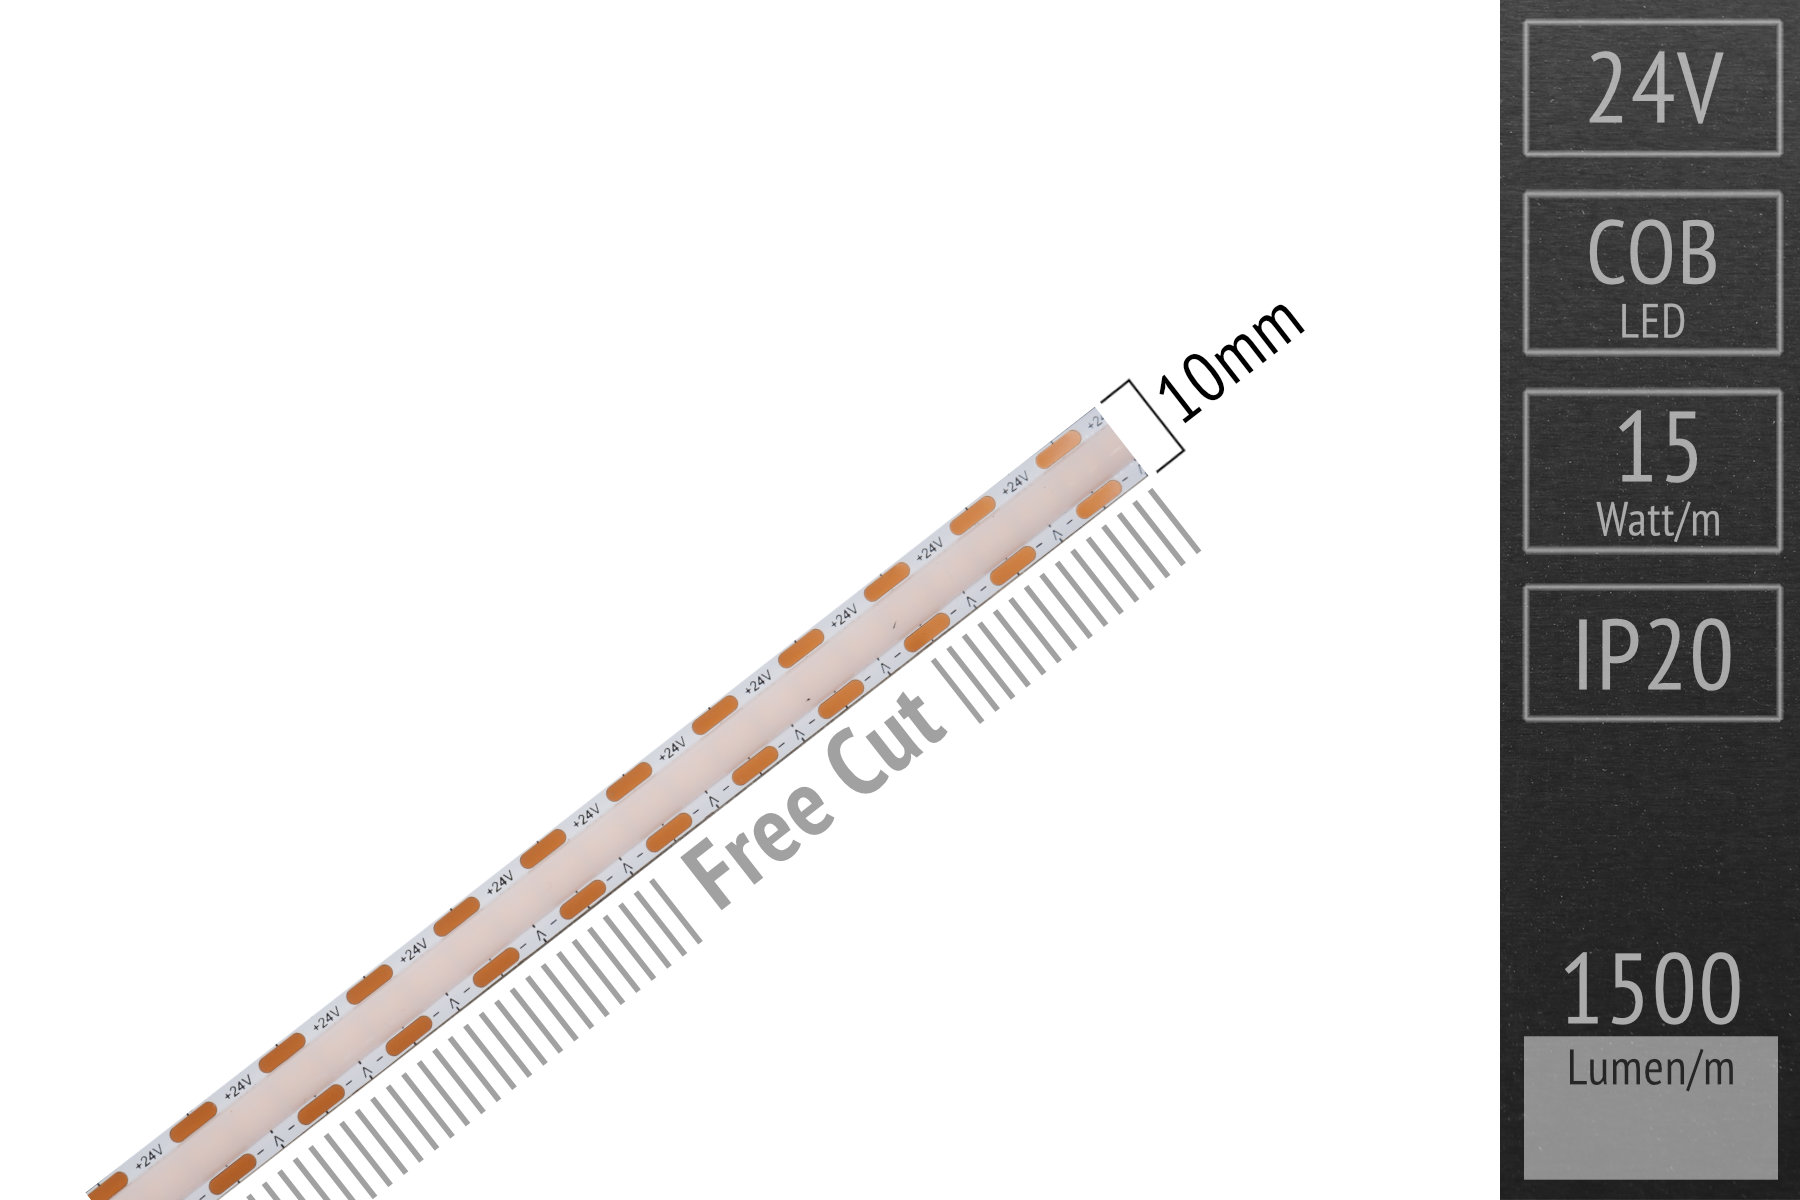 Neuheit: Free Cut COB LED-Streifen - Jede beliebige Länge realisierbar!